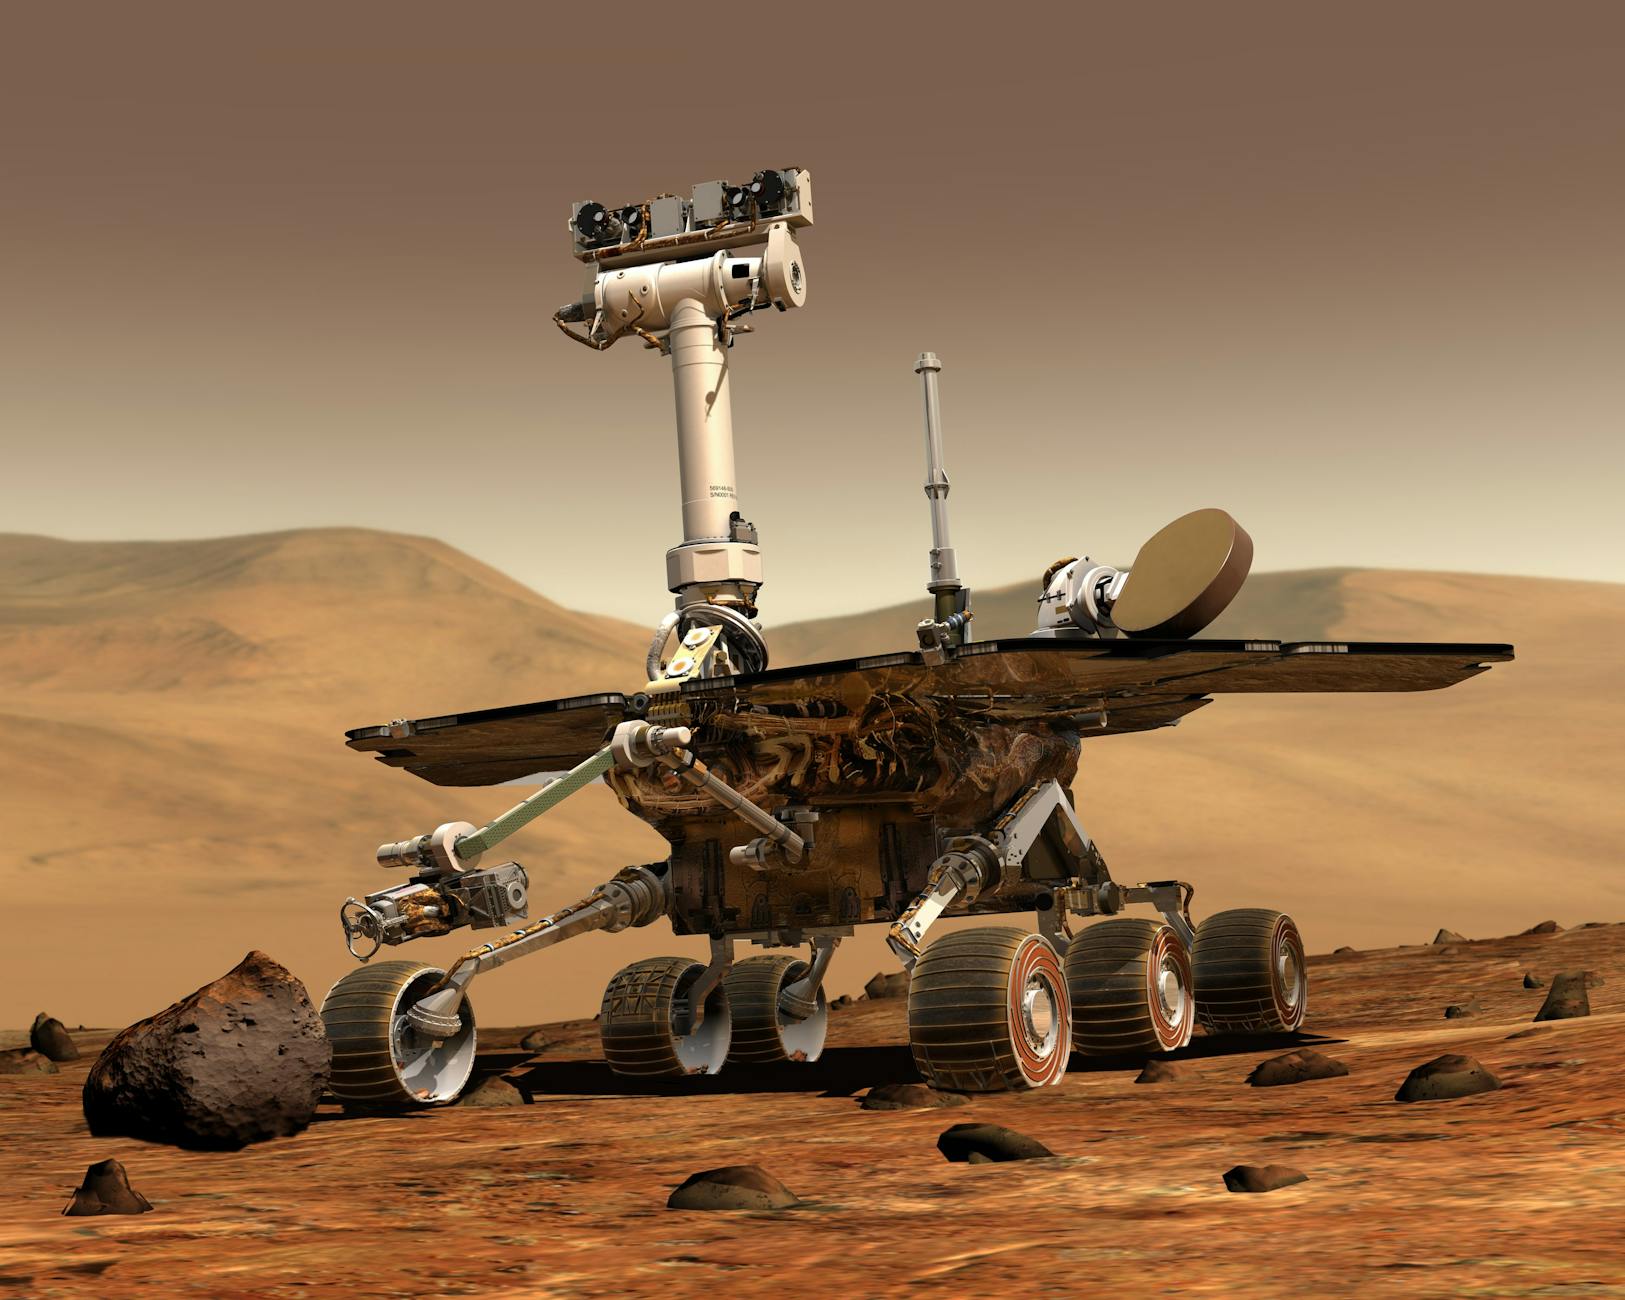 https://images.pexels.com/photos/73910/mars-mars-rover-space-travel-robot-73910.jpeg?auto=compress&cs=tinysrgb&dpr=2&h=650&w=940